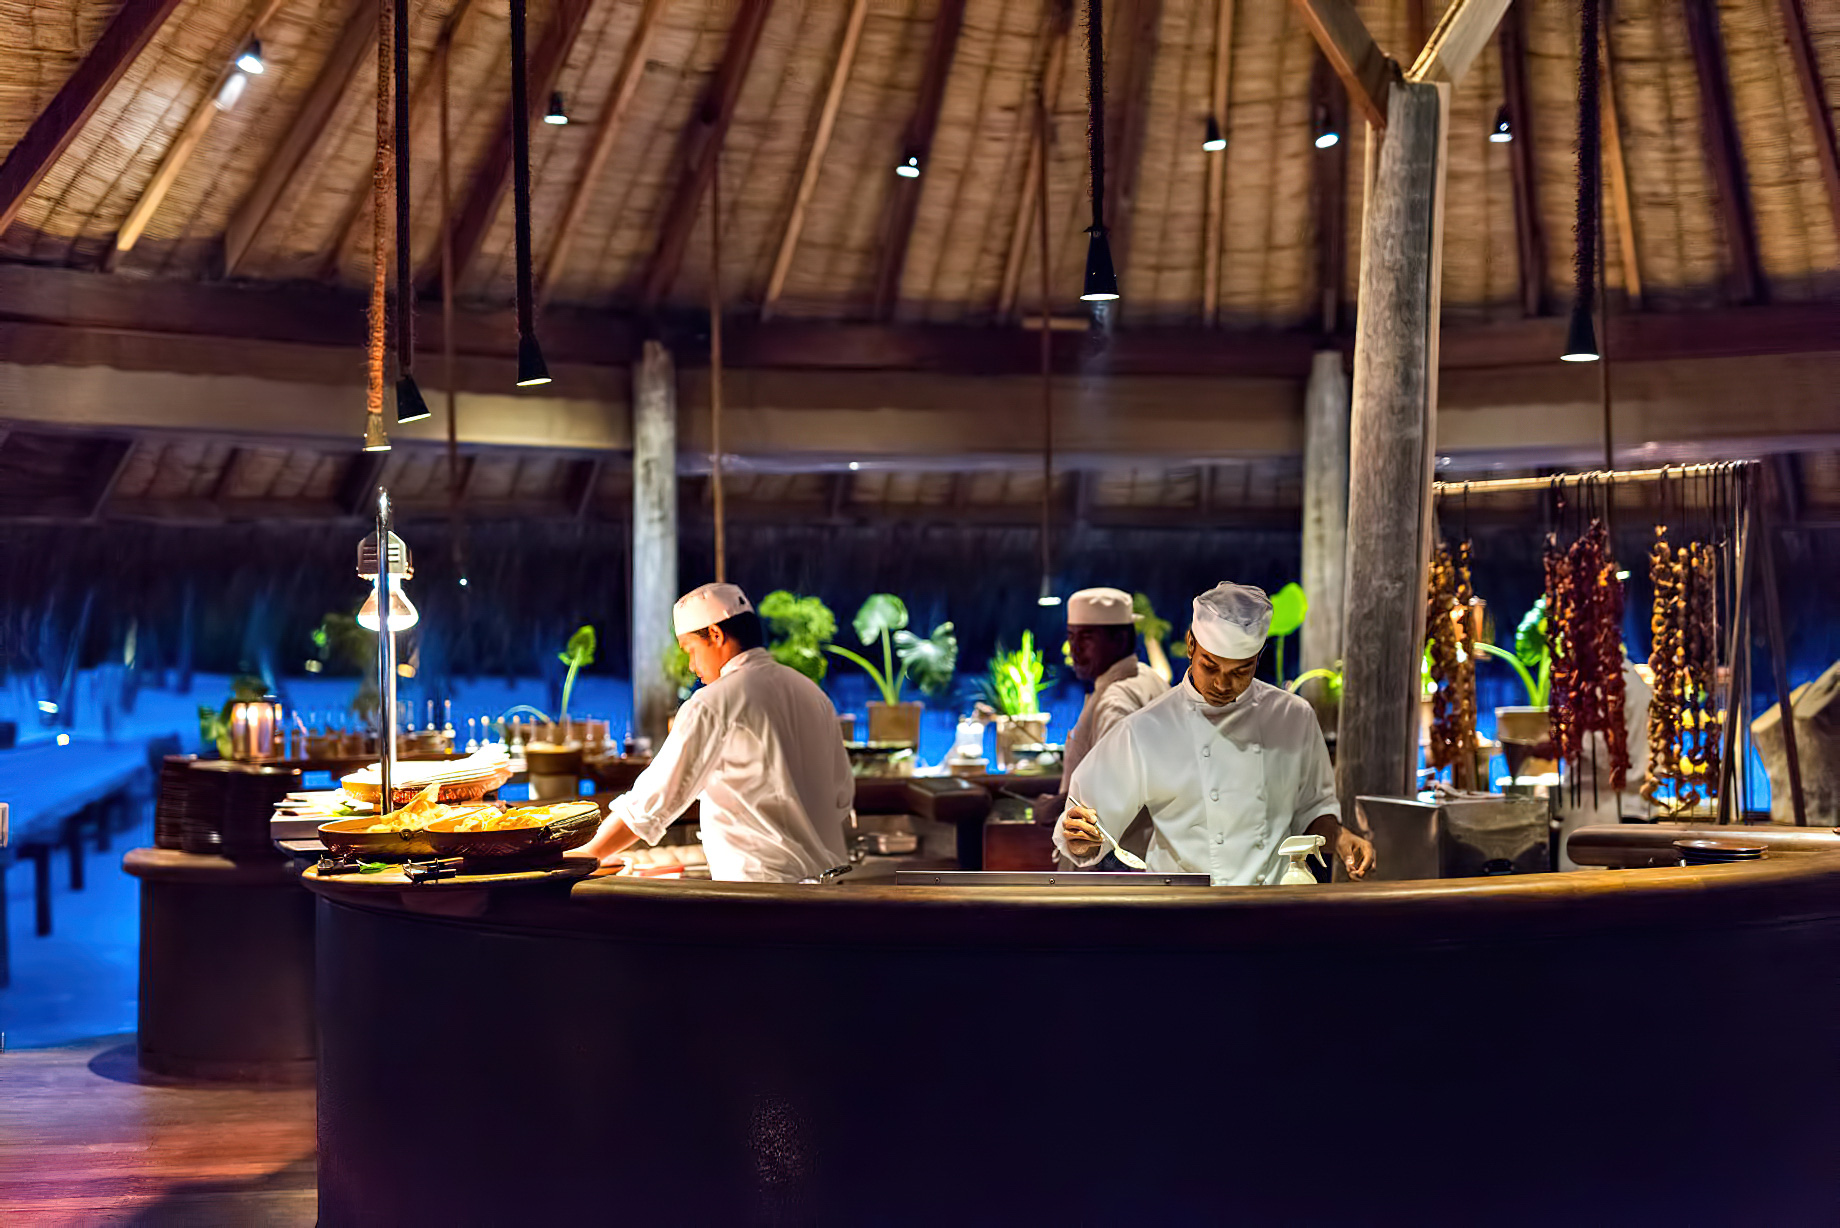 Gili Lankanfushi Resort - North Male Atoll, Maldives - Restaurant Chefs